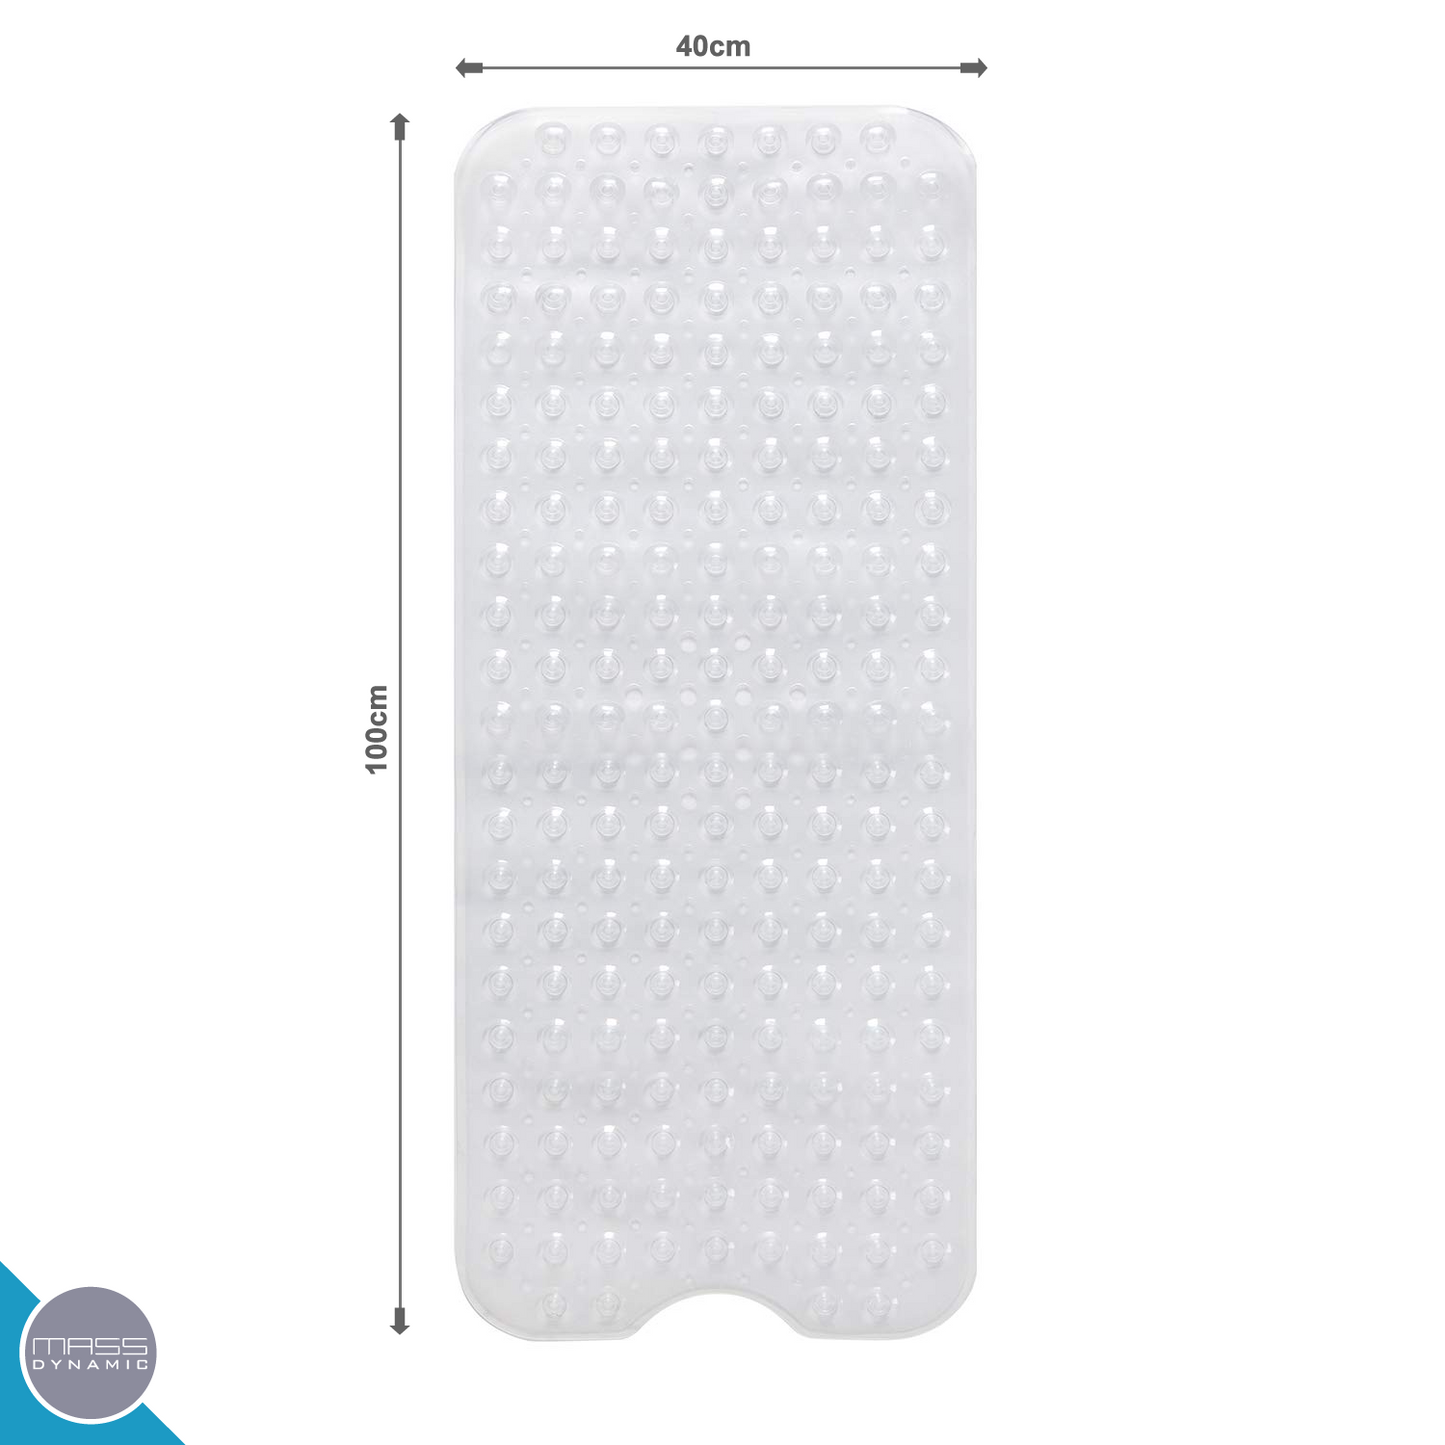 Non Slip Bath Mat | Extra Long Bath Mat | Machine Washable Shower Mats with Anti Slip Suction Cups (Transparent Clear)